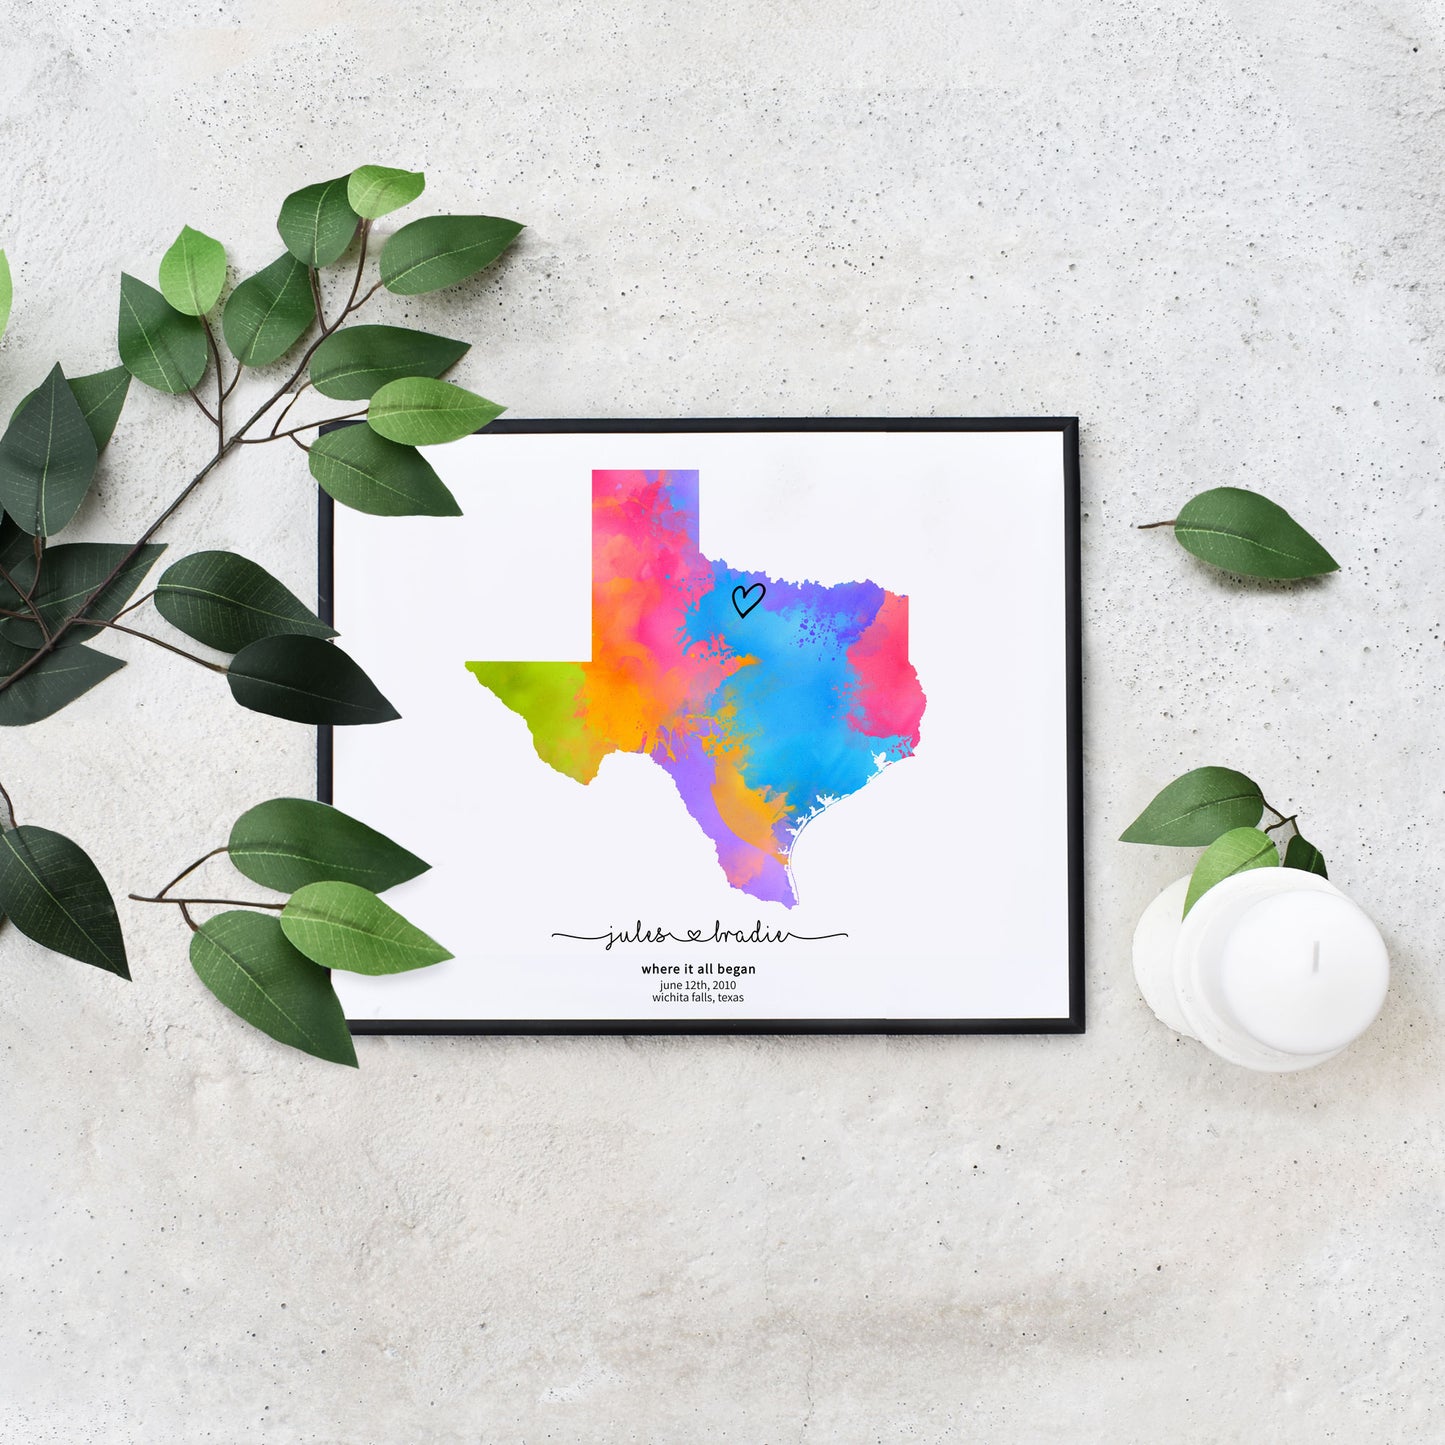 Quick Editable Rainbow Texas Milestone Map Template by Playful Pixie Studio